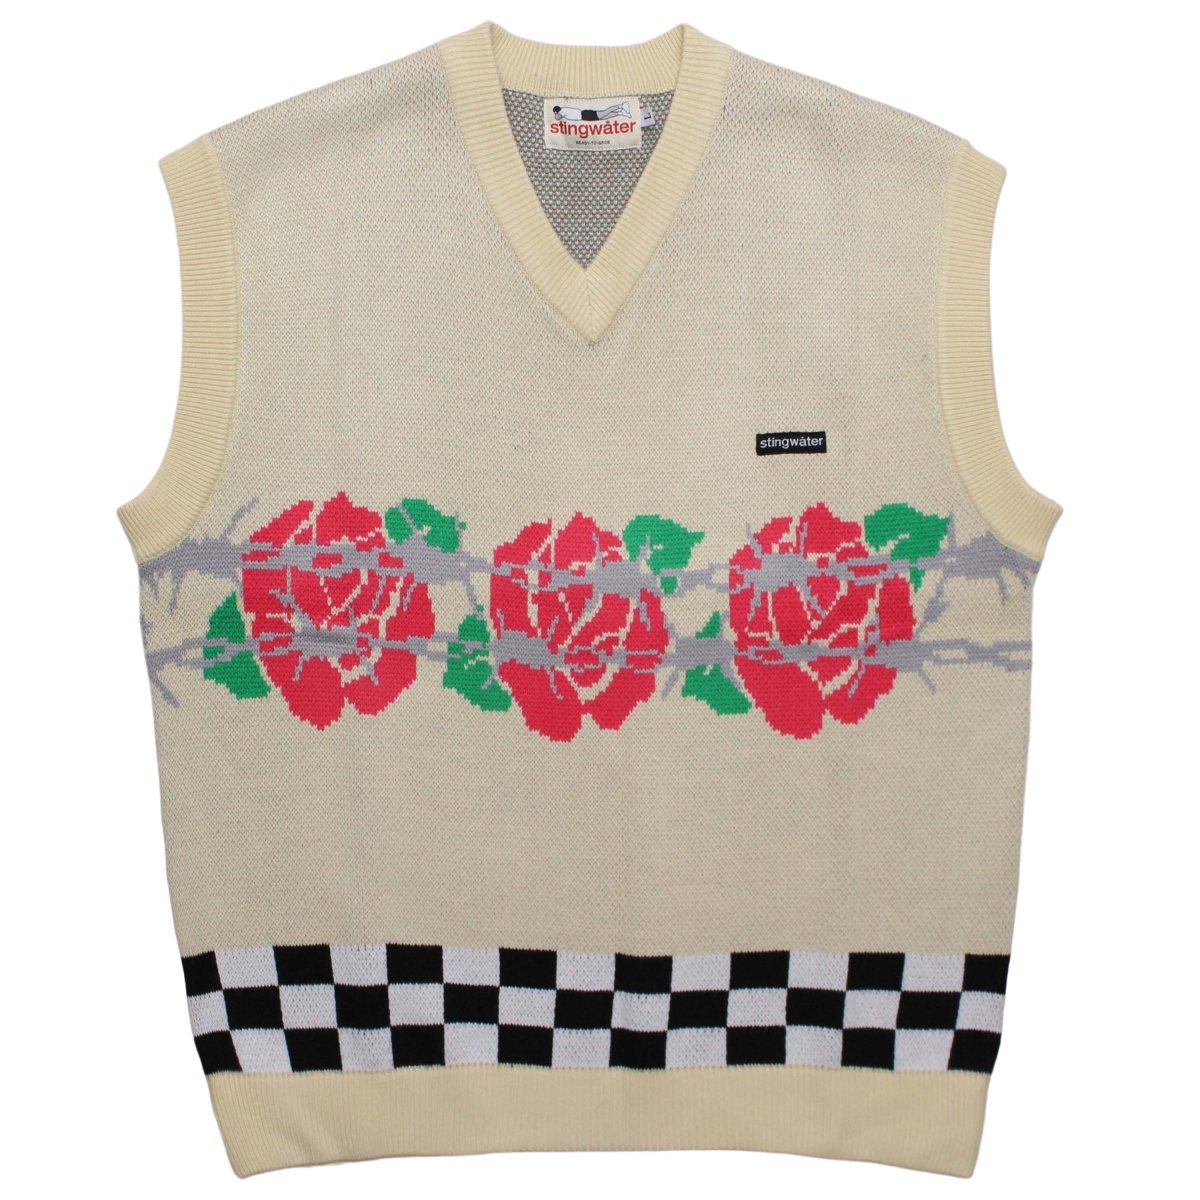 Rose sweater vest